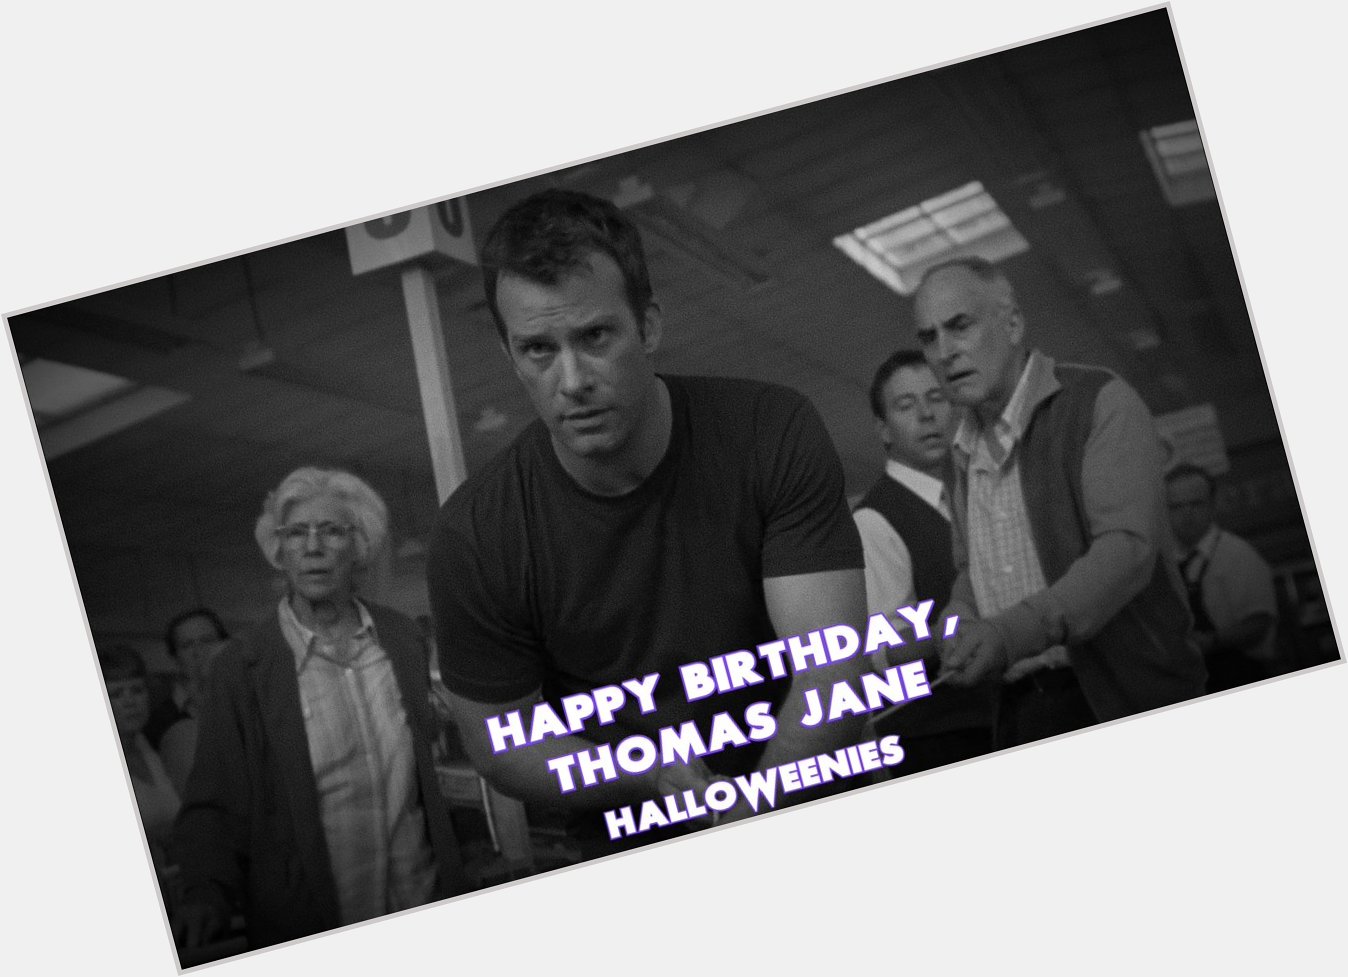 Happy Birthday to infinite hunk Thomas Jane! 